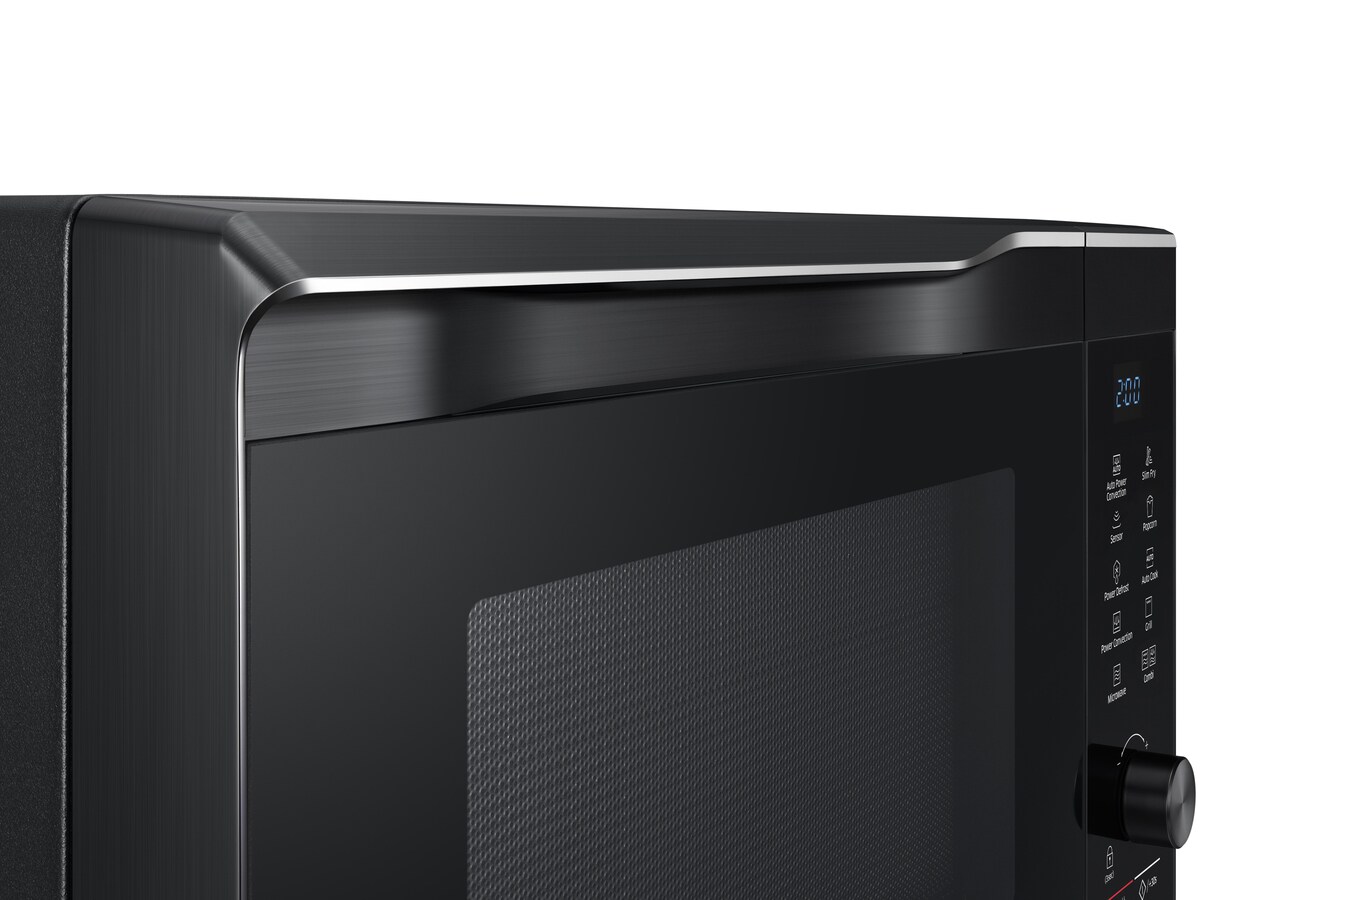 Best Buy: Samsung 1.1 Cu. Ft. Countertop Microwave Stainless steel  MC11H6033CT